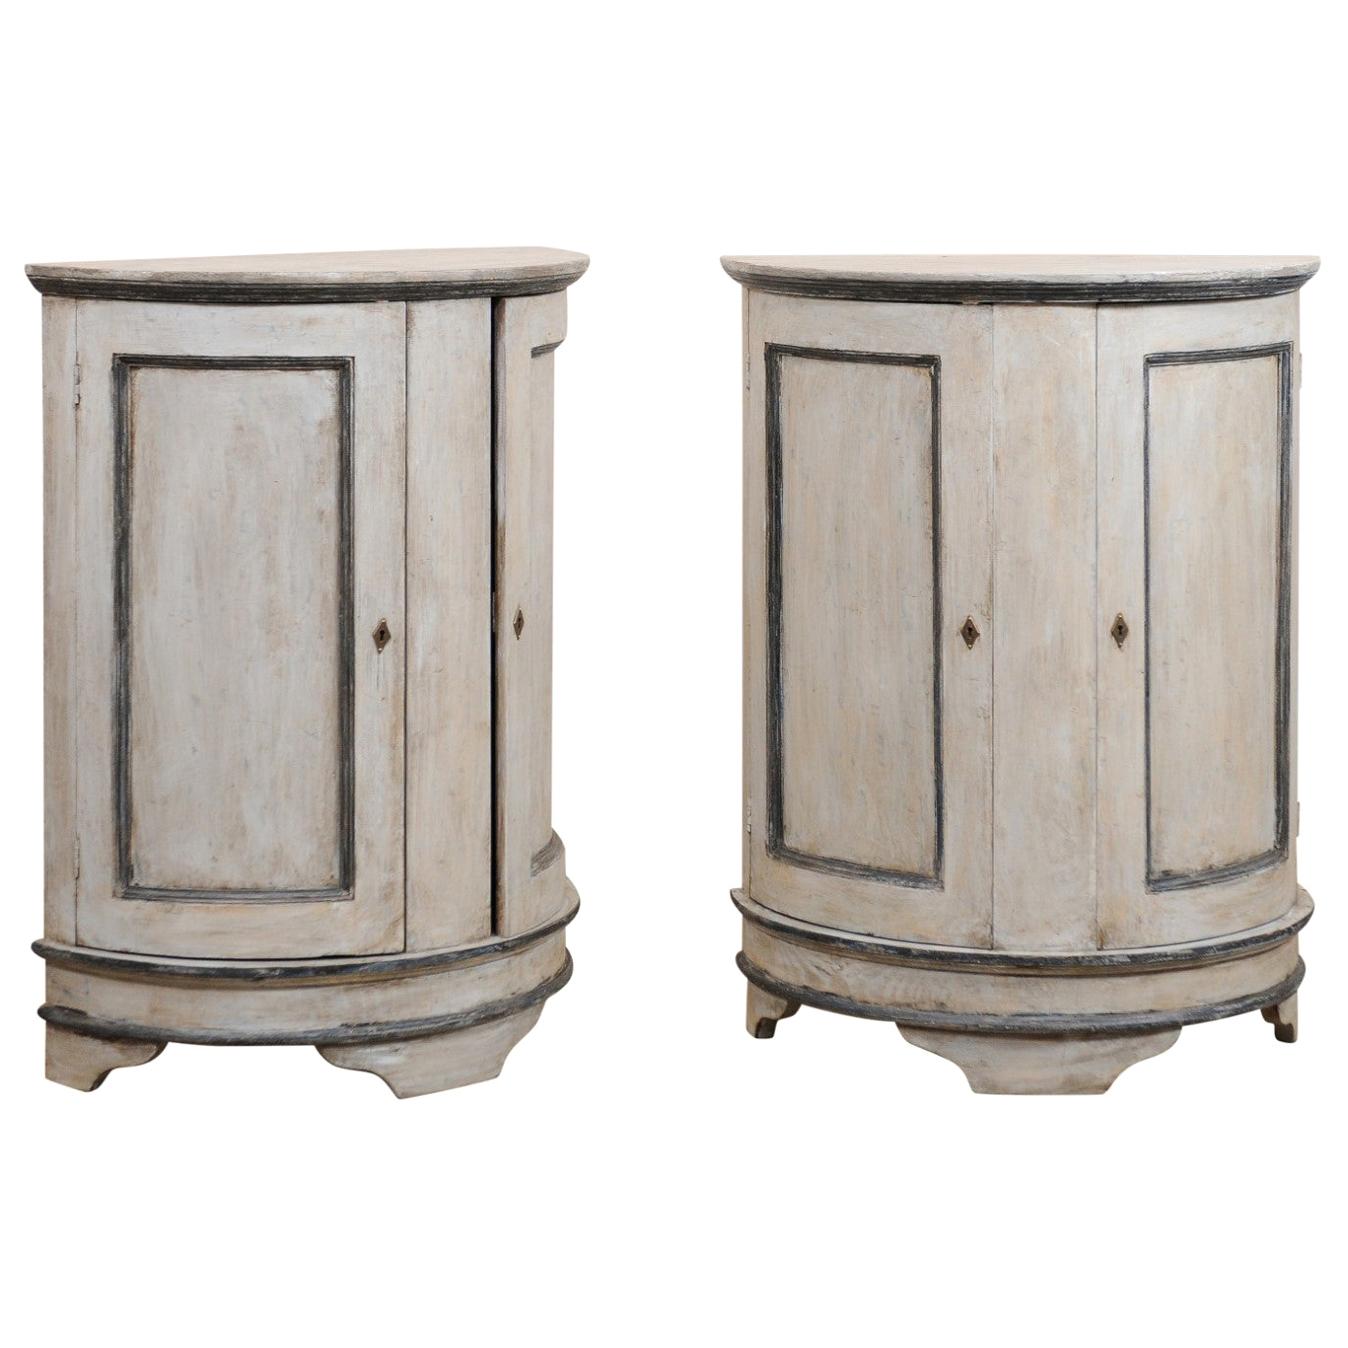 Pair of European Painted Wood Demilune 2-Door Cabinets in Gray